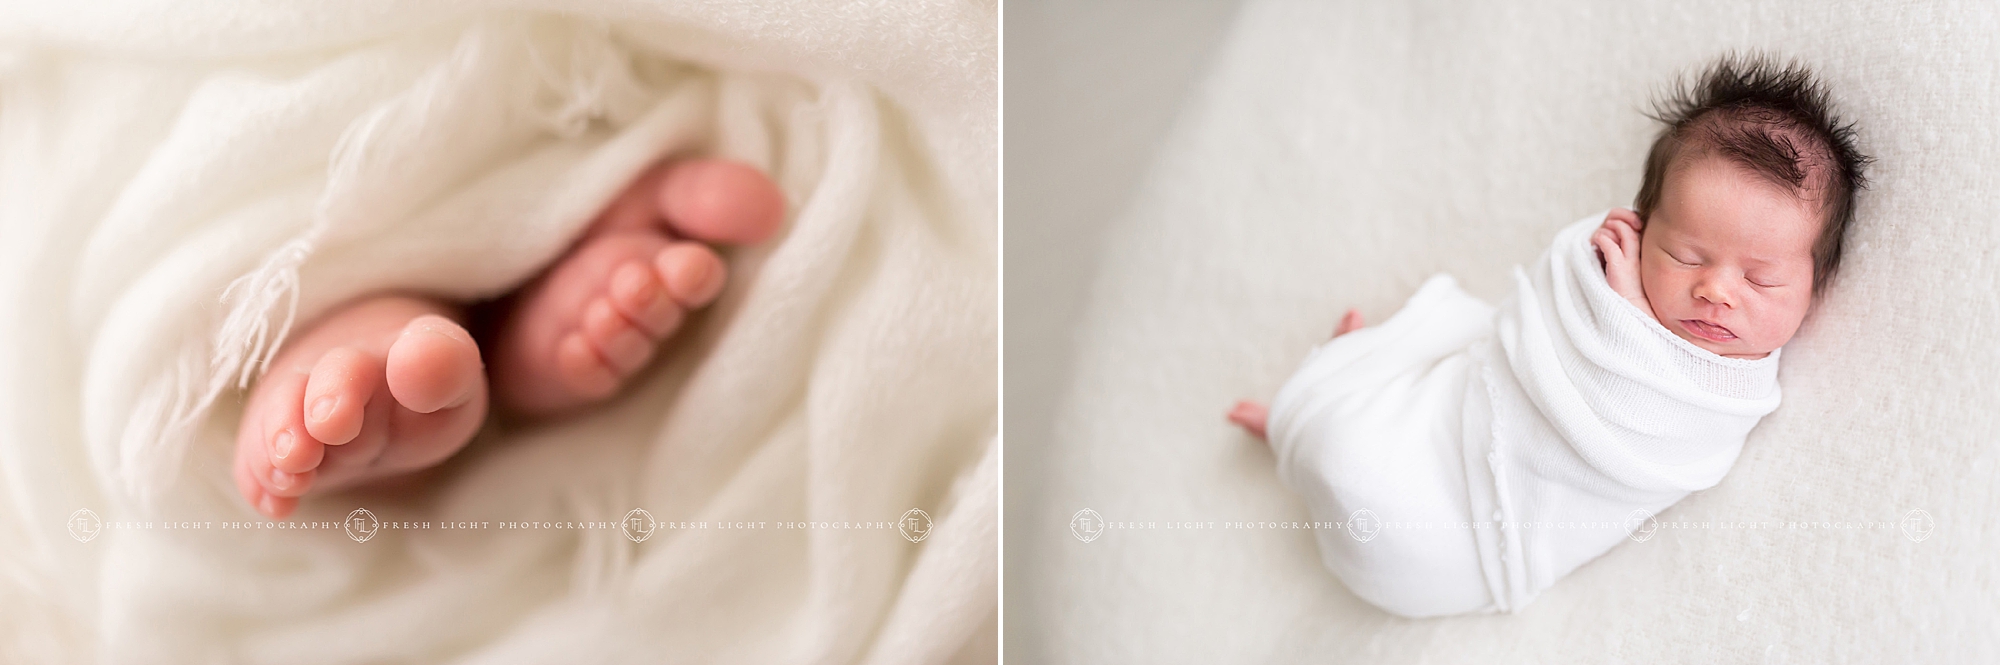 close of newborn baby toes